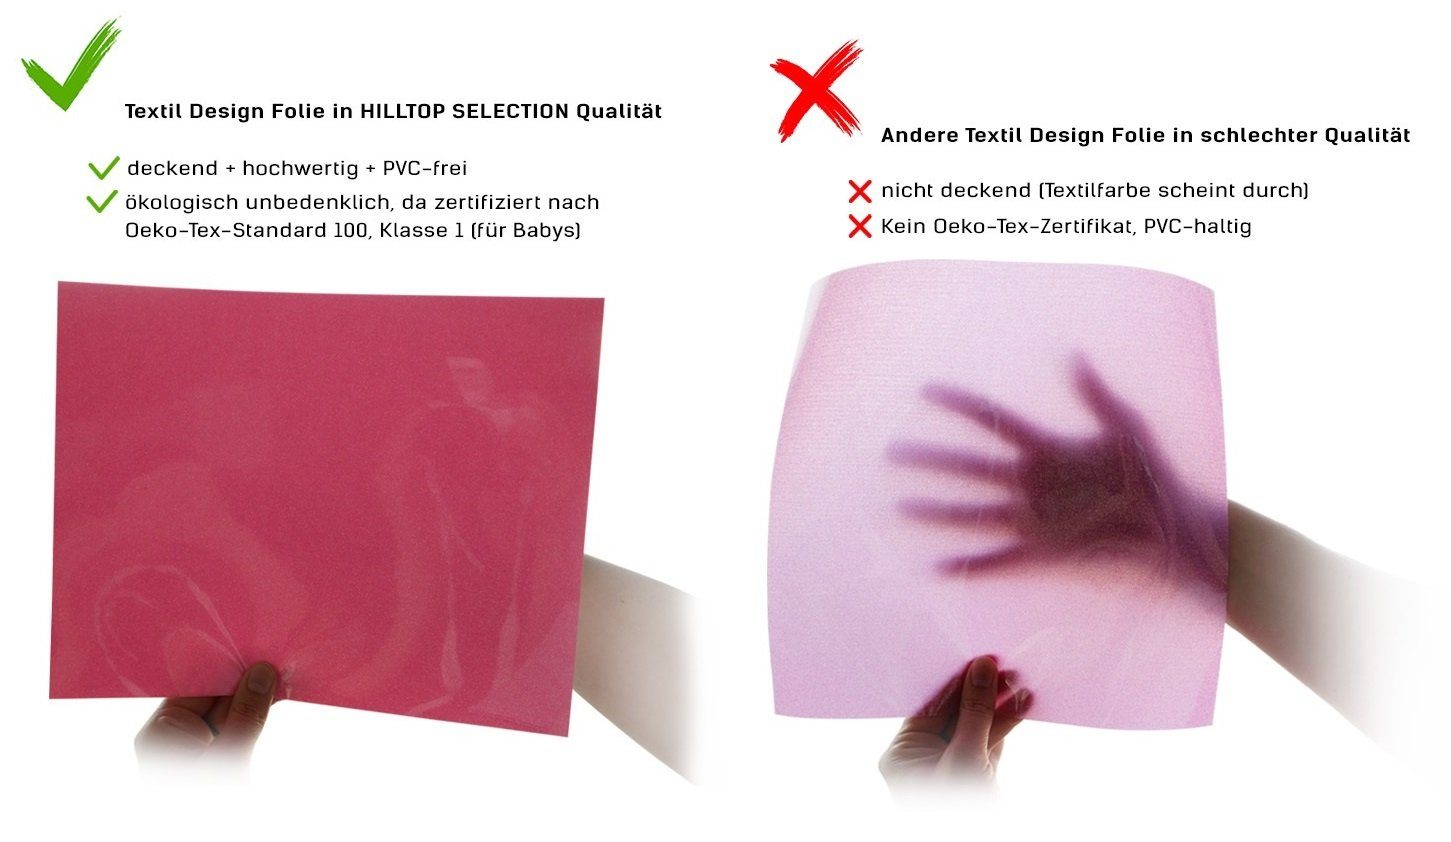 Hilltop 7 Transferfolie, Summer Aufbügeln Transparentpapier Hello Textilfolie x auf Textilien zum A4